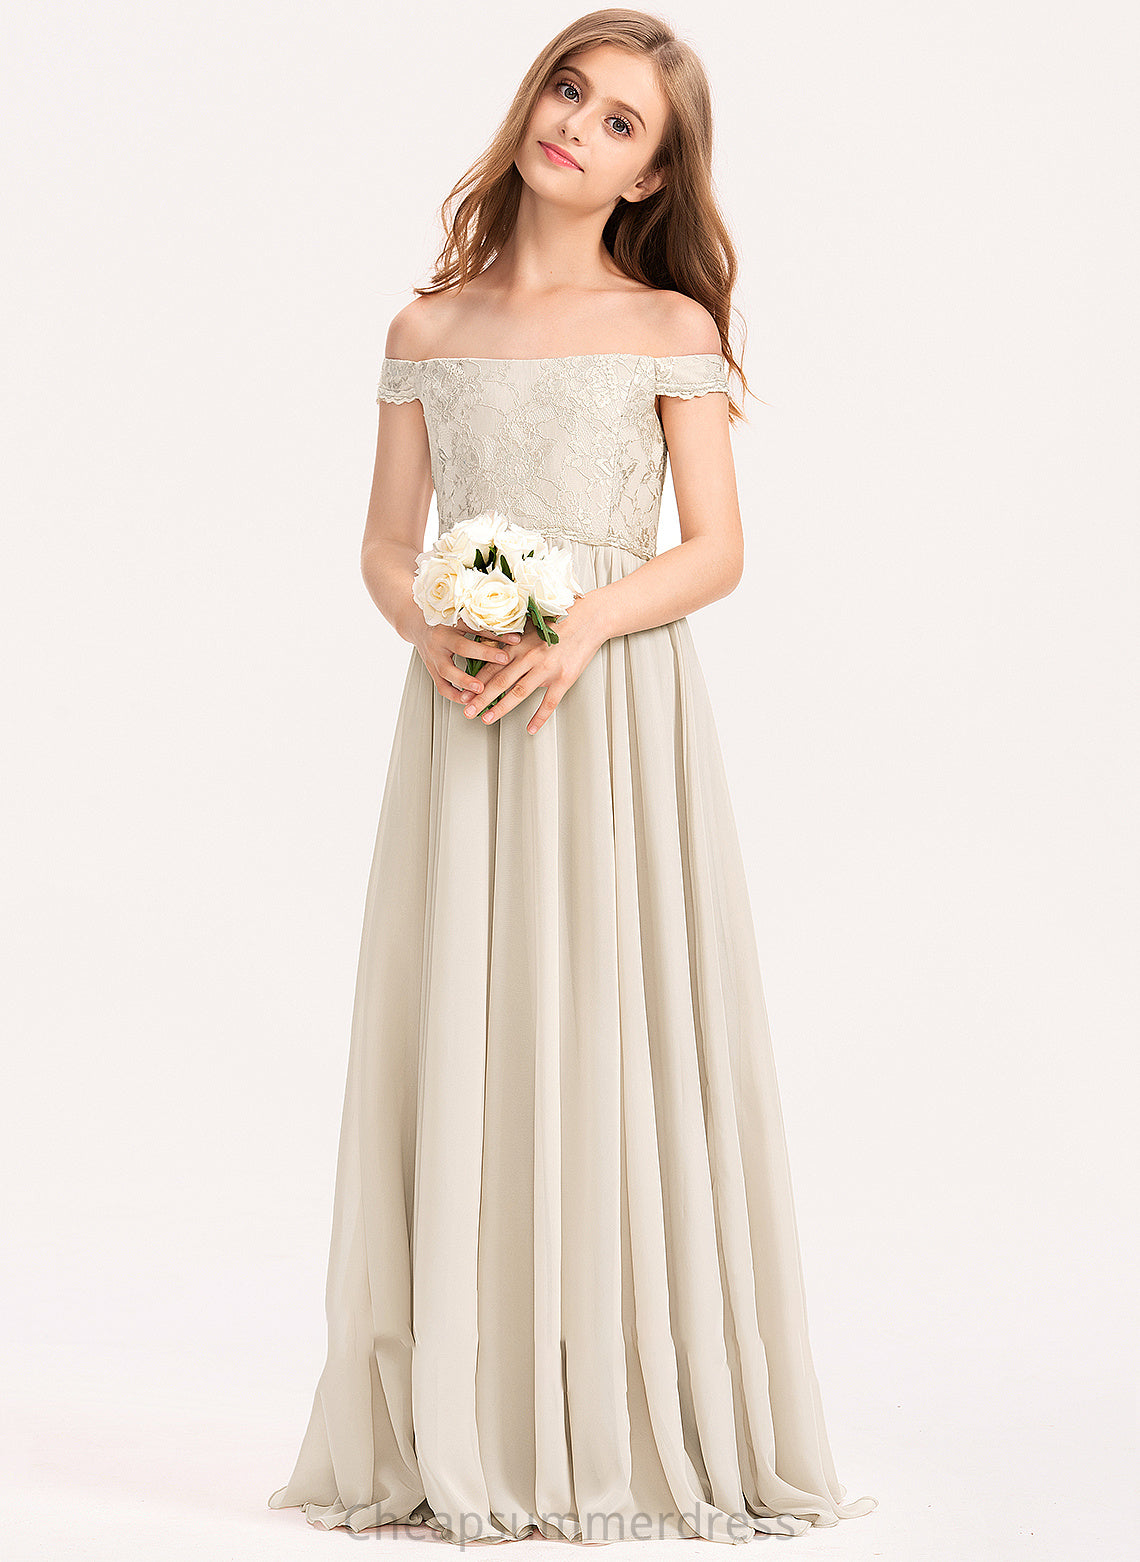 Chiffon Junior Bridesmaid Dresses Floor-Length Off-the-Shoulder A-Line Lace Alissa